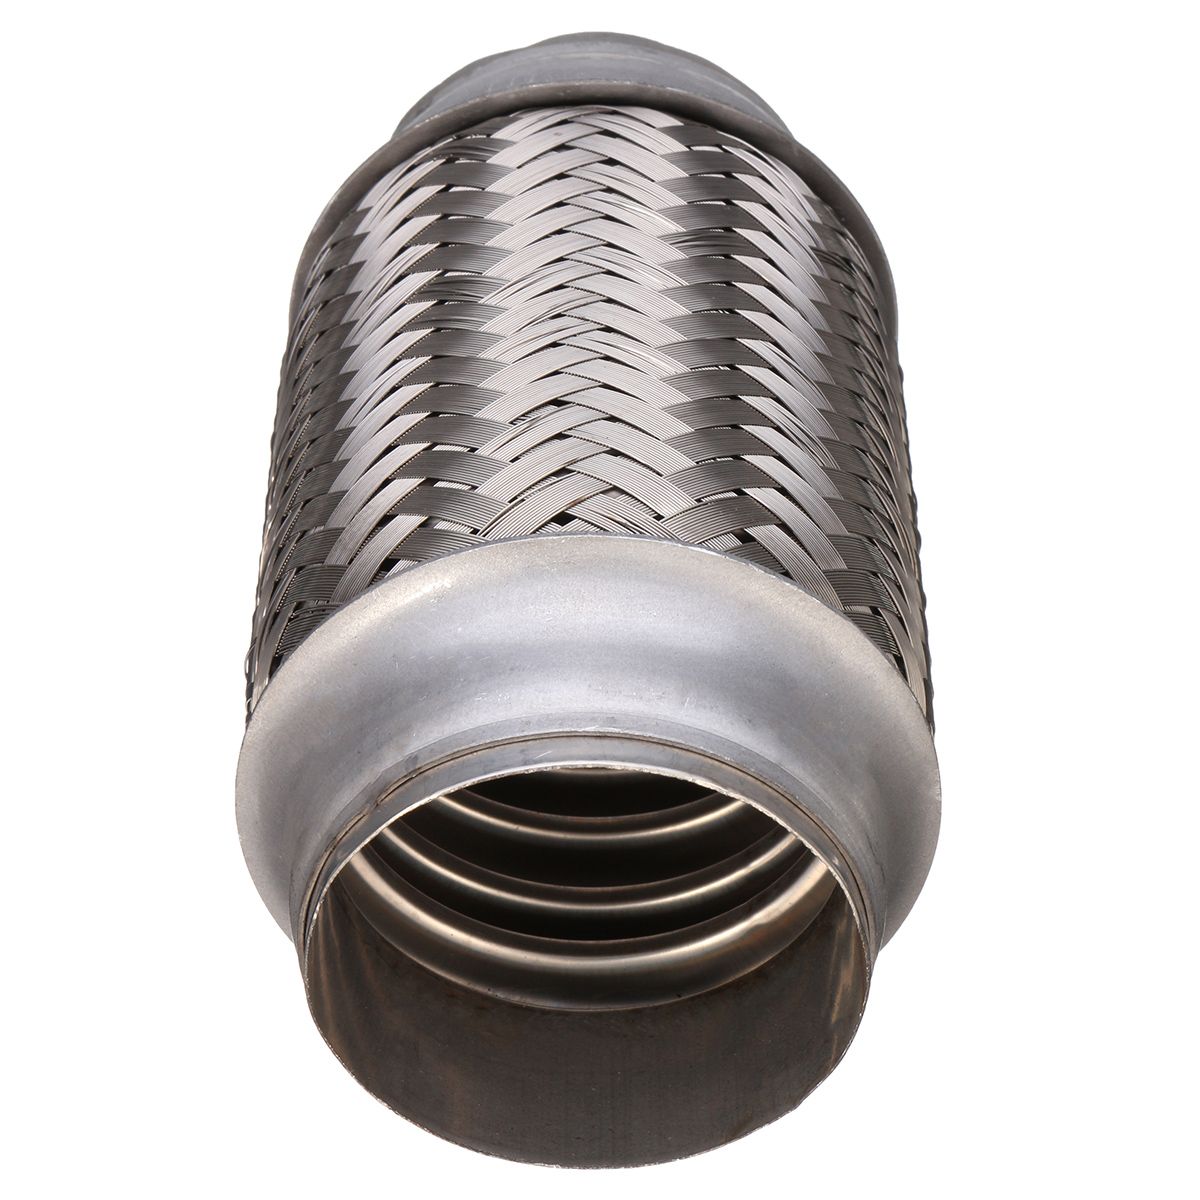 Weld-On-Exhaust-Flexi-Flexible-Joint-Repair-Pipe-Flex-63mm-x-153mm-1188804